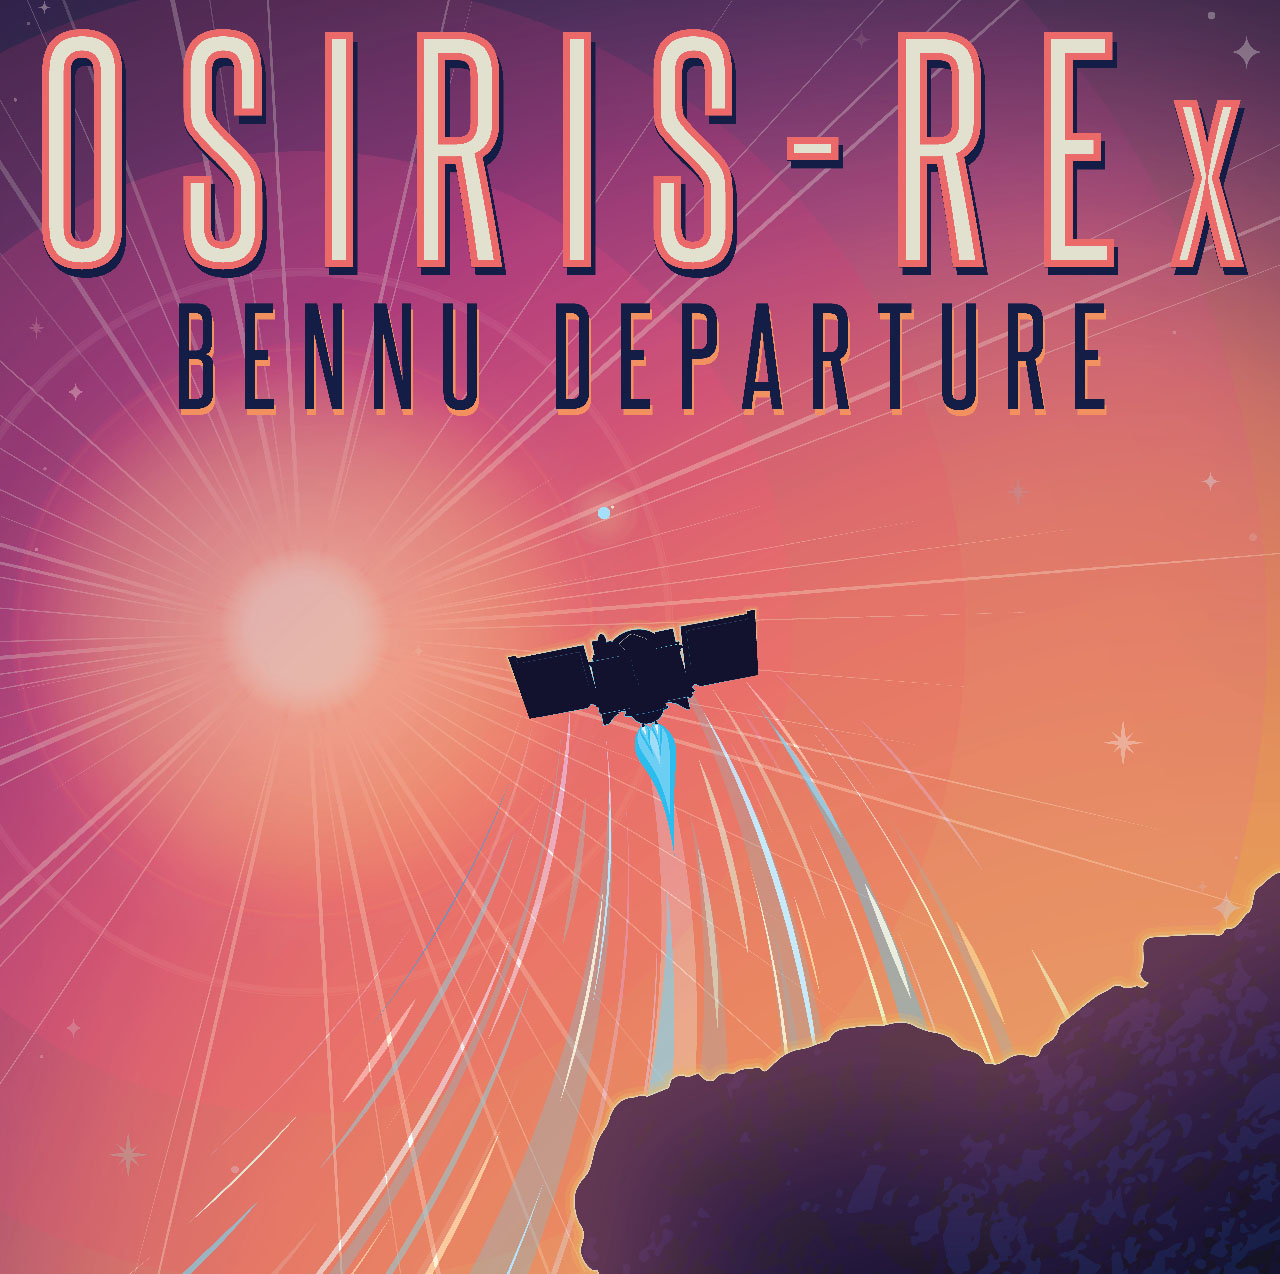 pinkish-purple-hued poster with silhouette illustration of OSIRIS-REx spacecraft departing asteroid Bennu